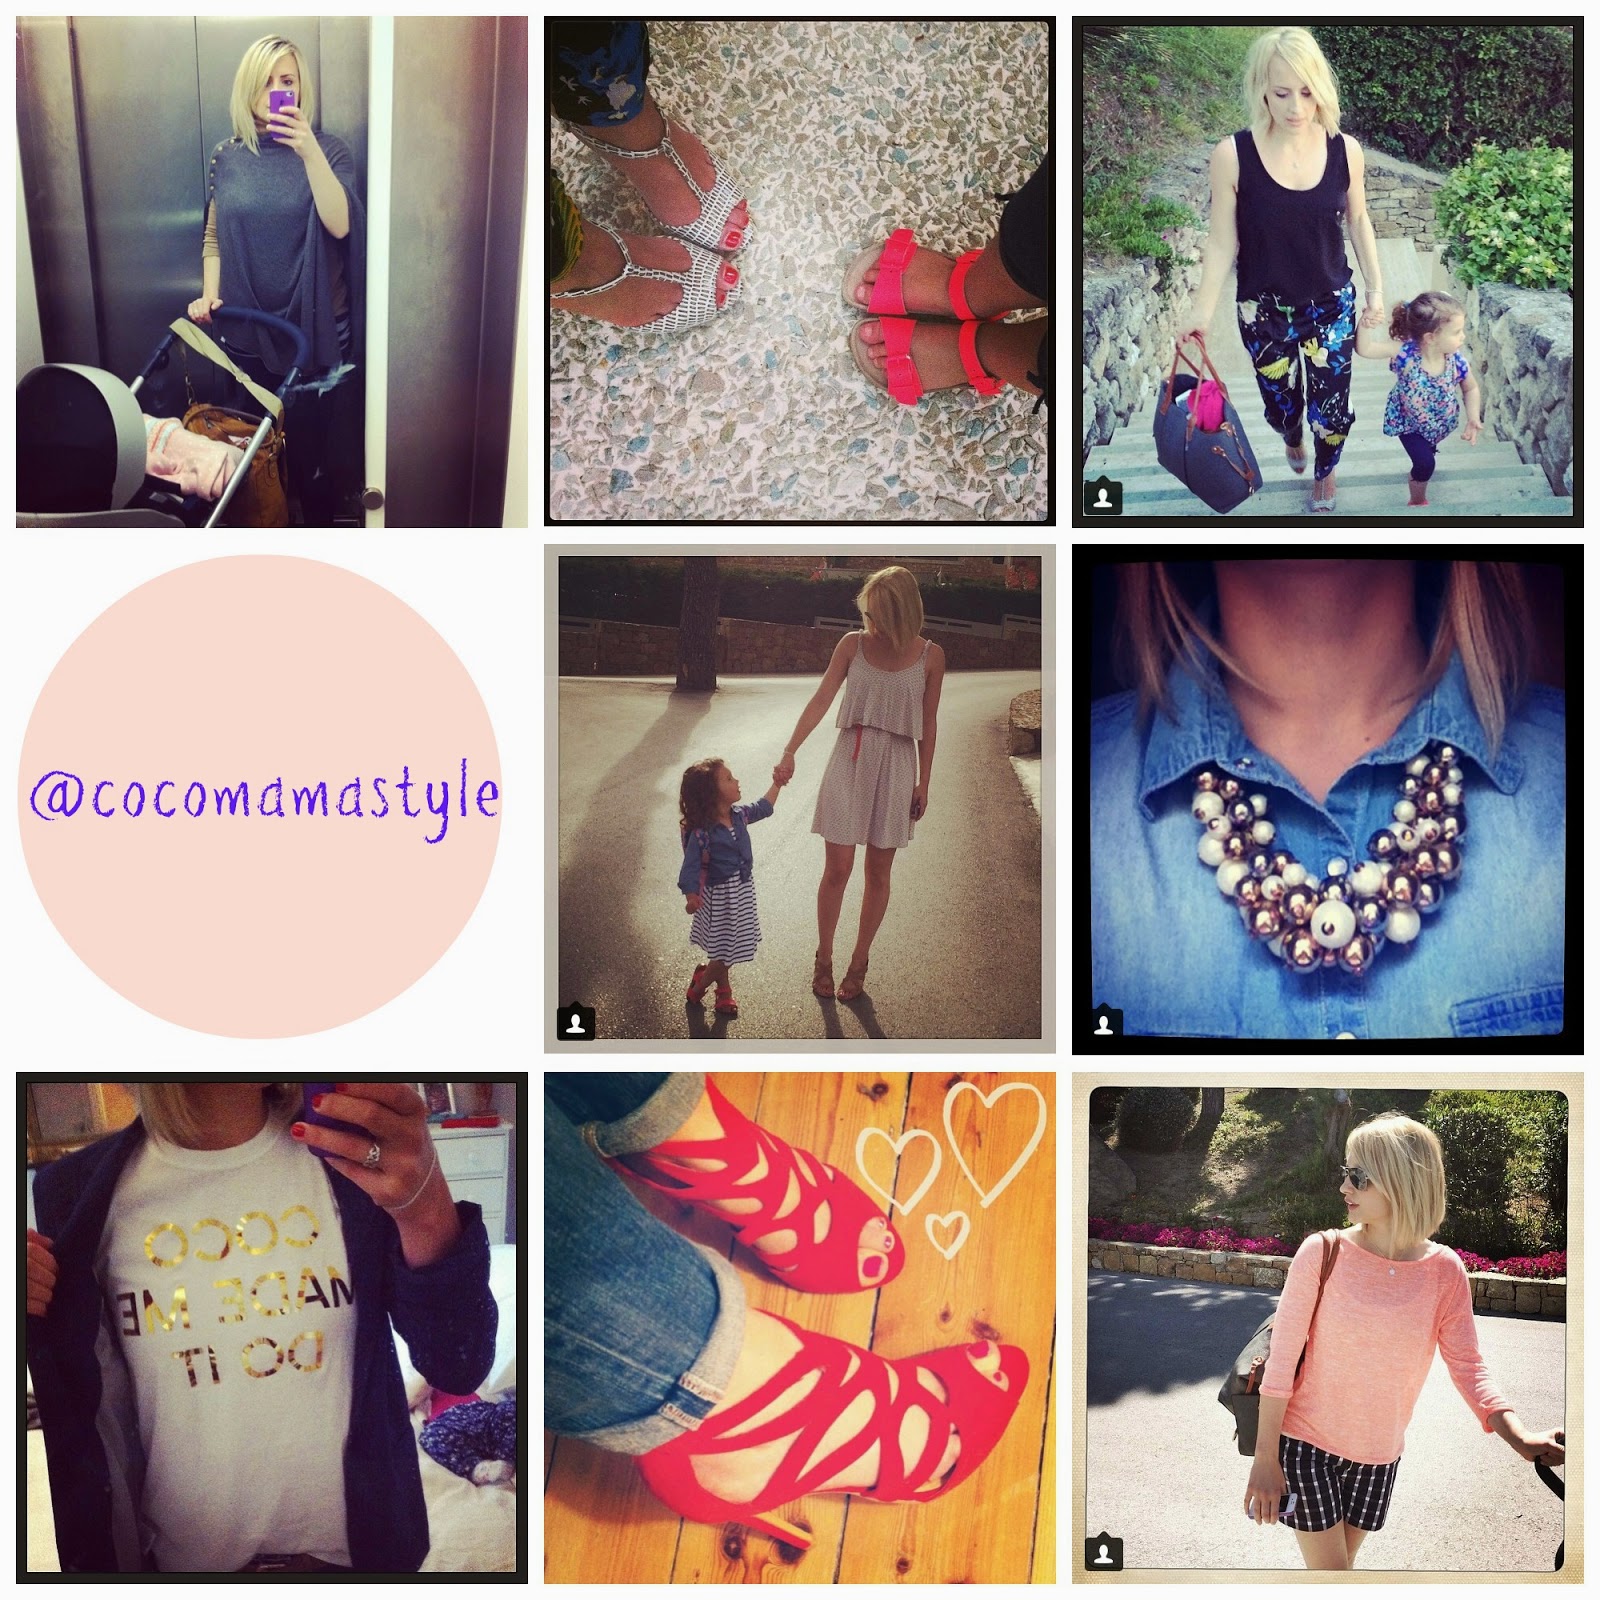 10 of the most STYLISH mums on Instagram! (Part 1) | ohjoy | joy cho | bloggers | stylish mums | mama style | fashion | style | mostly yummy | mostly yummy mummy | fashionistas | courtney babyccino | babayccino kids | courtney adamo | instagram | photography | picts | feed | instagram feed | picts | filters | stylish | Rlle strauss | shop bop | lucky magazine | helen channing | cocomamastyls | journalists | stylist | bloggers | fashion magazine | graphic designers | mamasVIb | my fave instagrm feeds | popular intsgram feeds | mamasVIB 